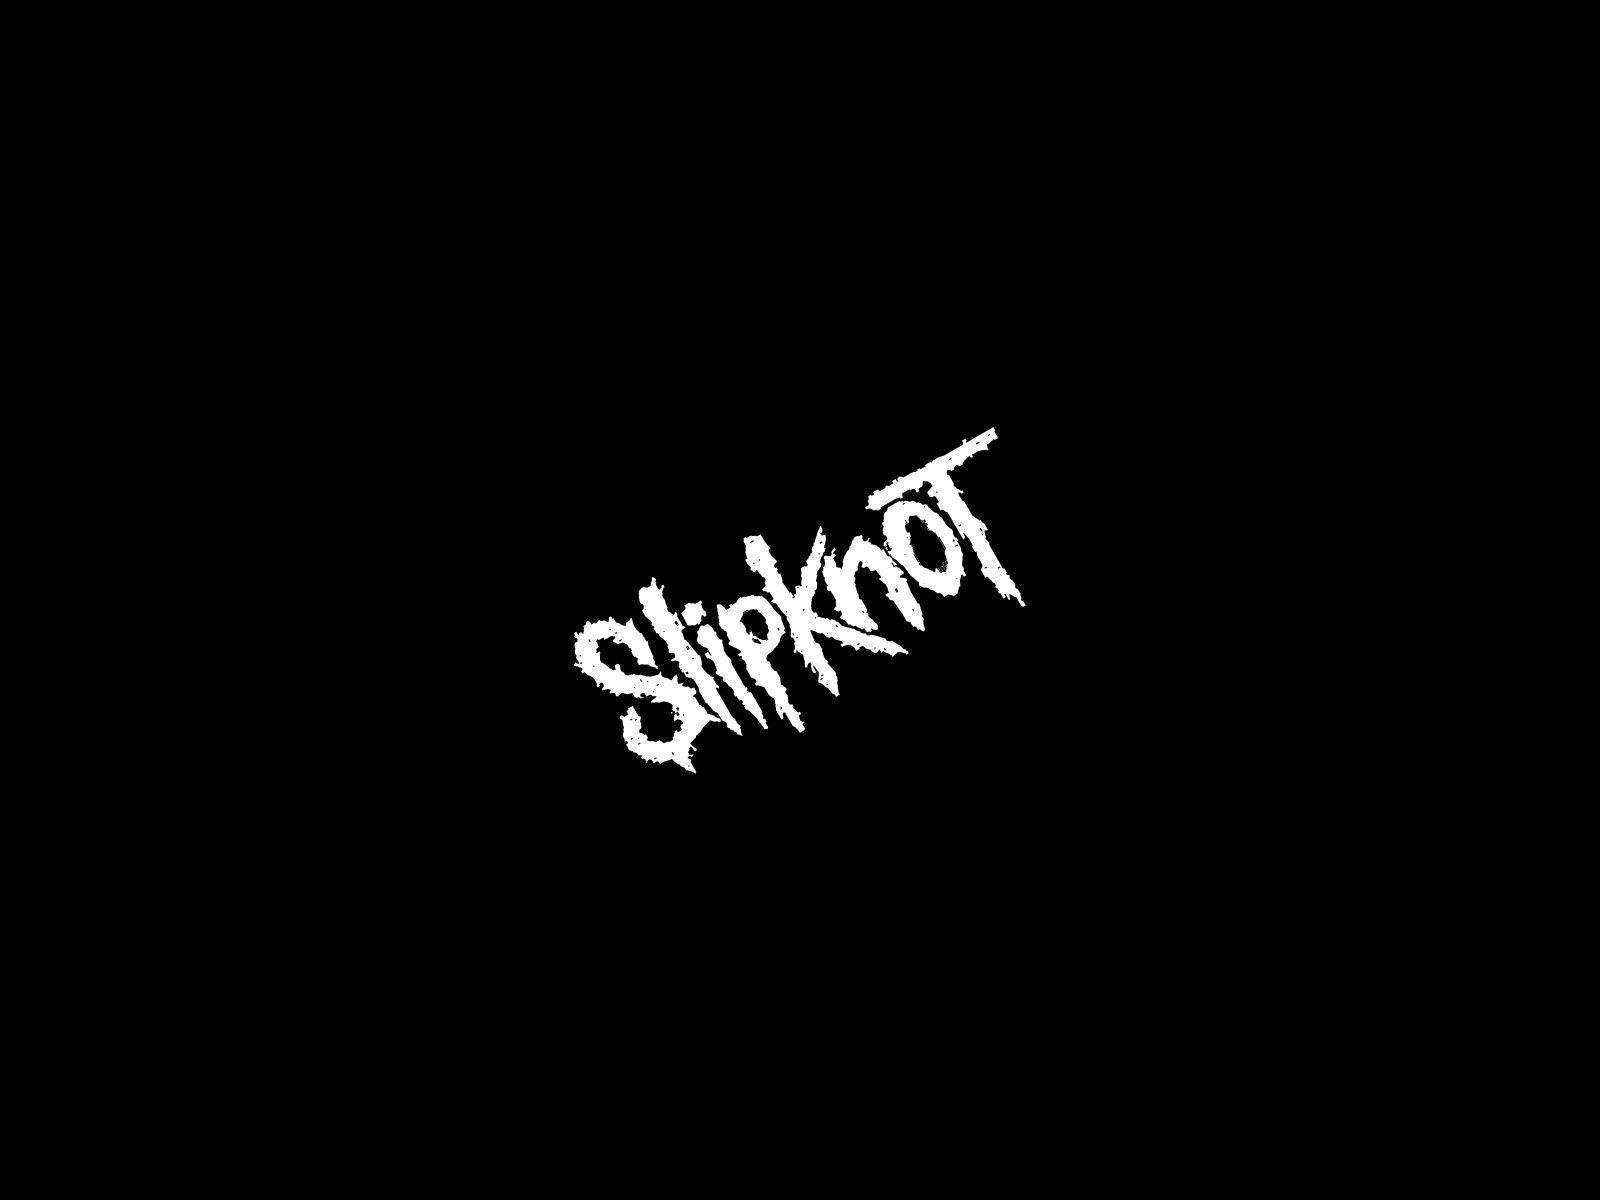 Slipknot logo and wallpaper. Band logos band logos, metal